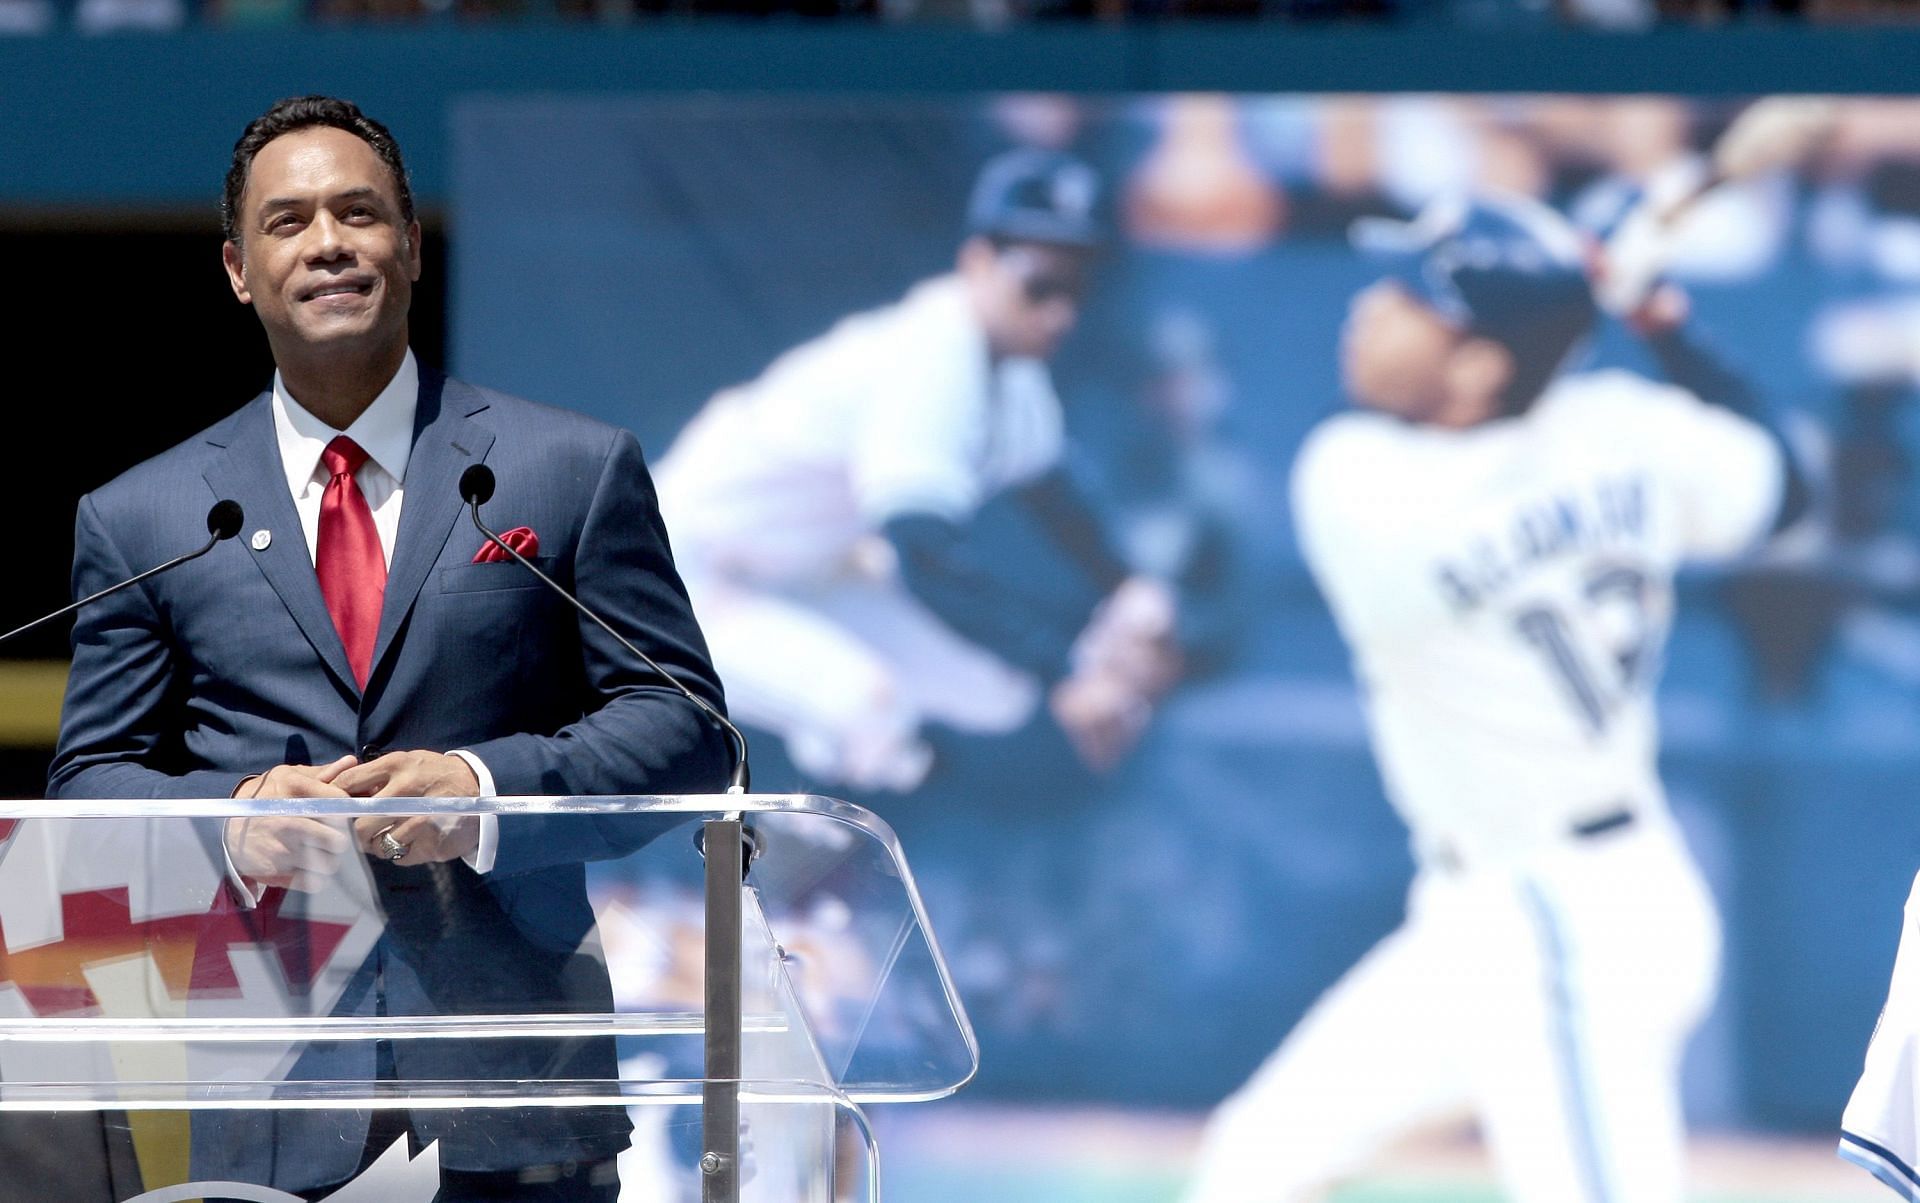 MLB And Toronto Blue Jays Ban Roberto Alomar After Sexual